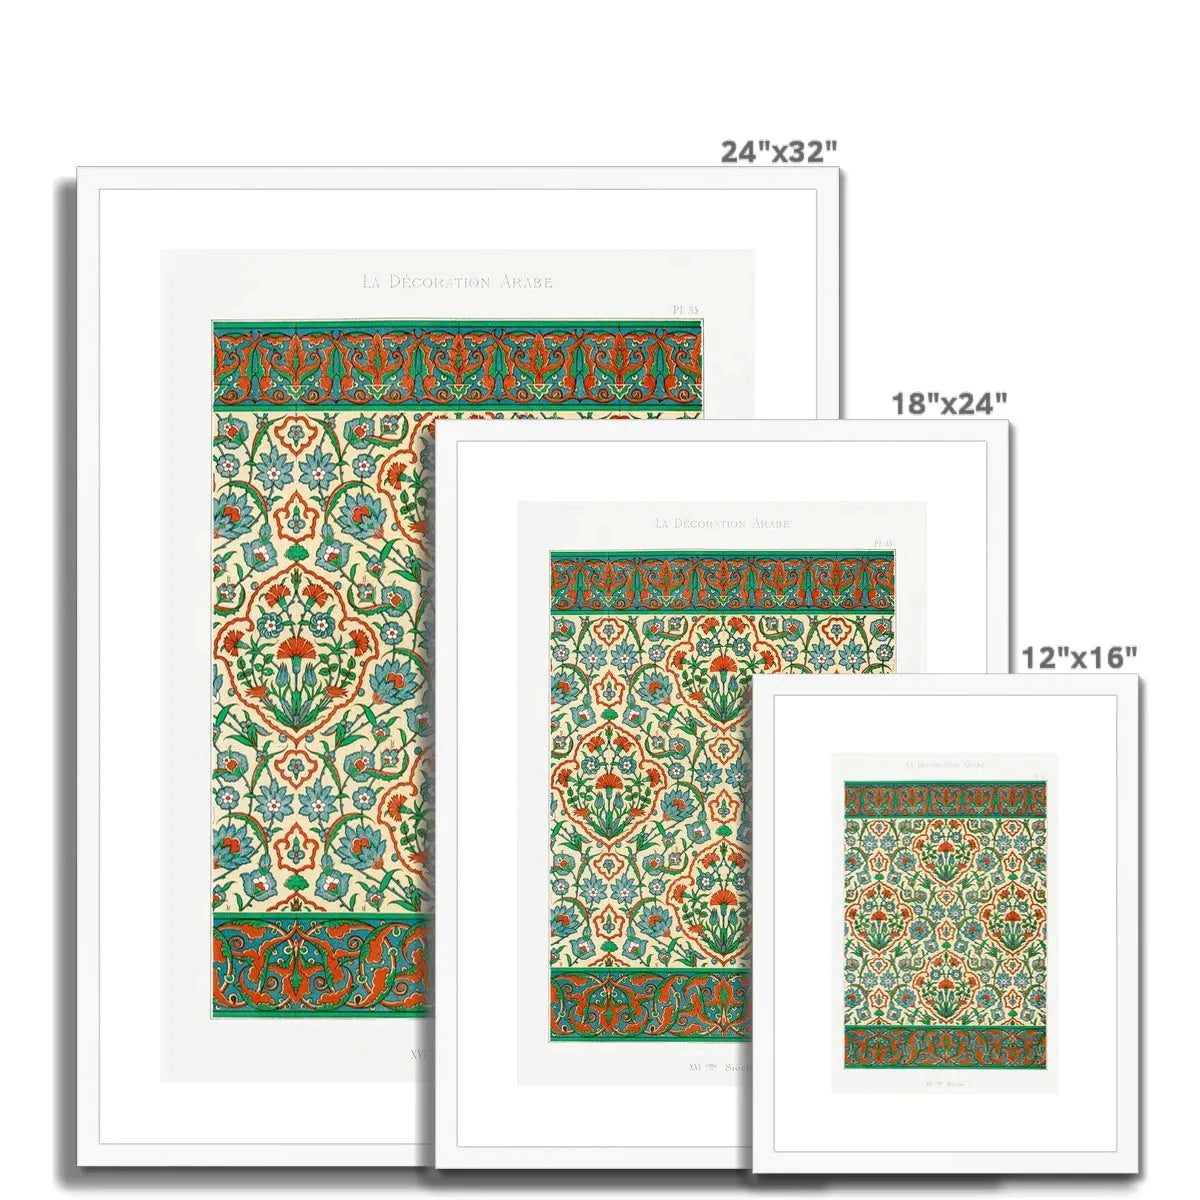 Emile Prisse D’avennes Pattern La Decoration Arabe Plate 33 Framed & Mounted Print - Posters Prints & Visual Artwork